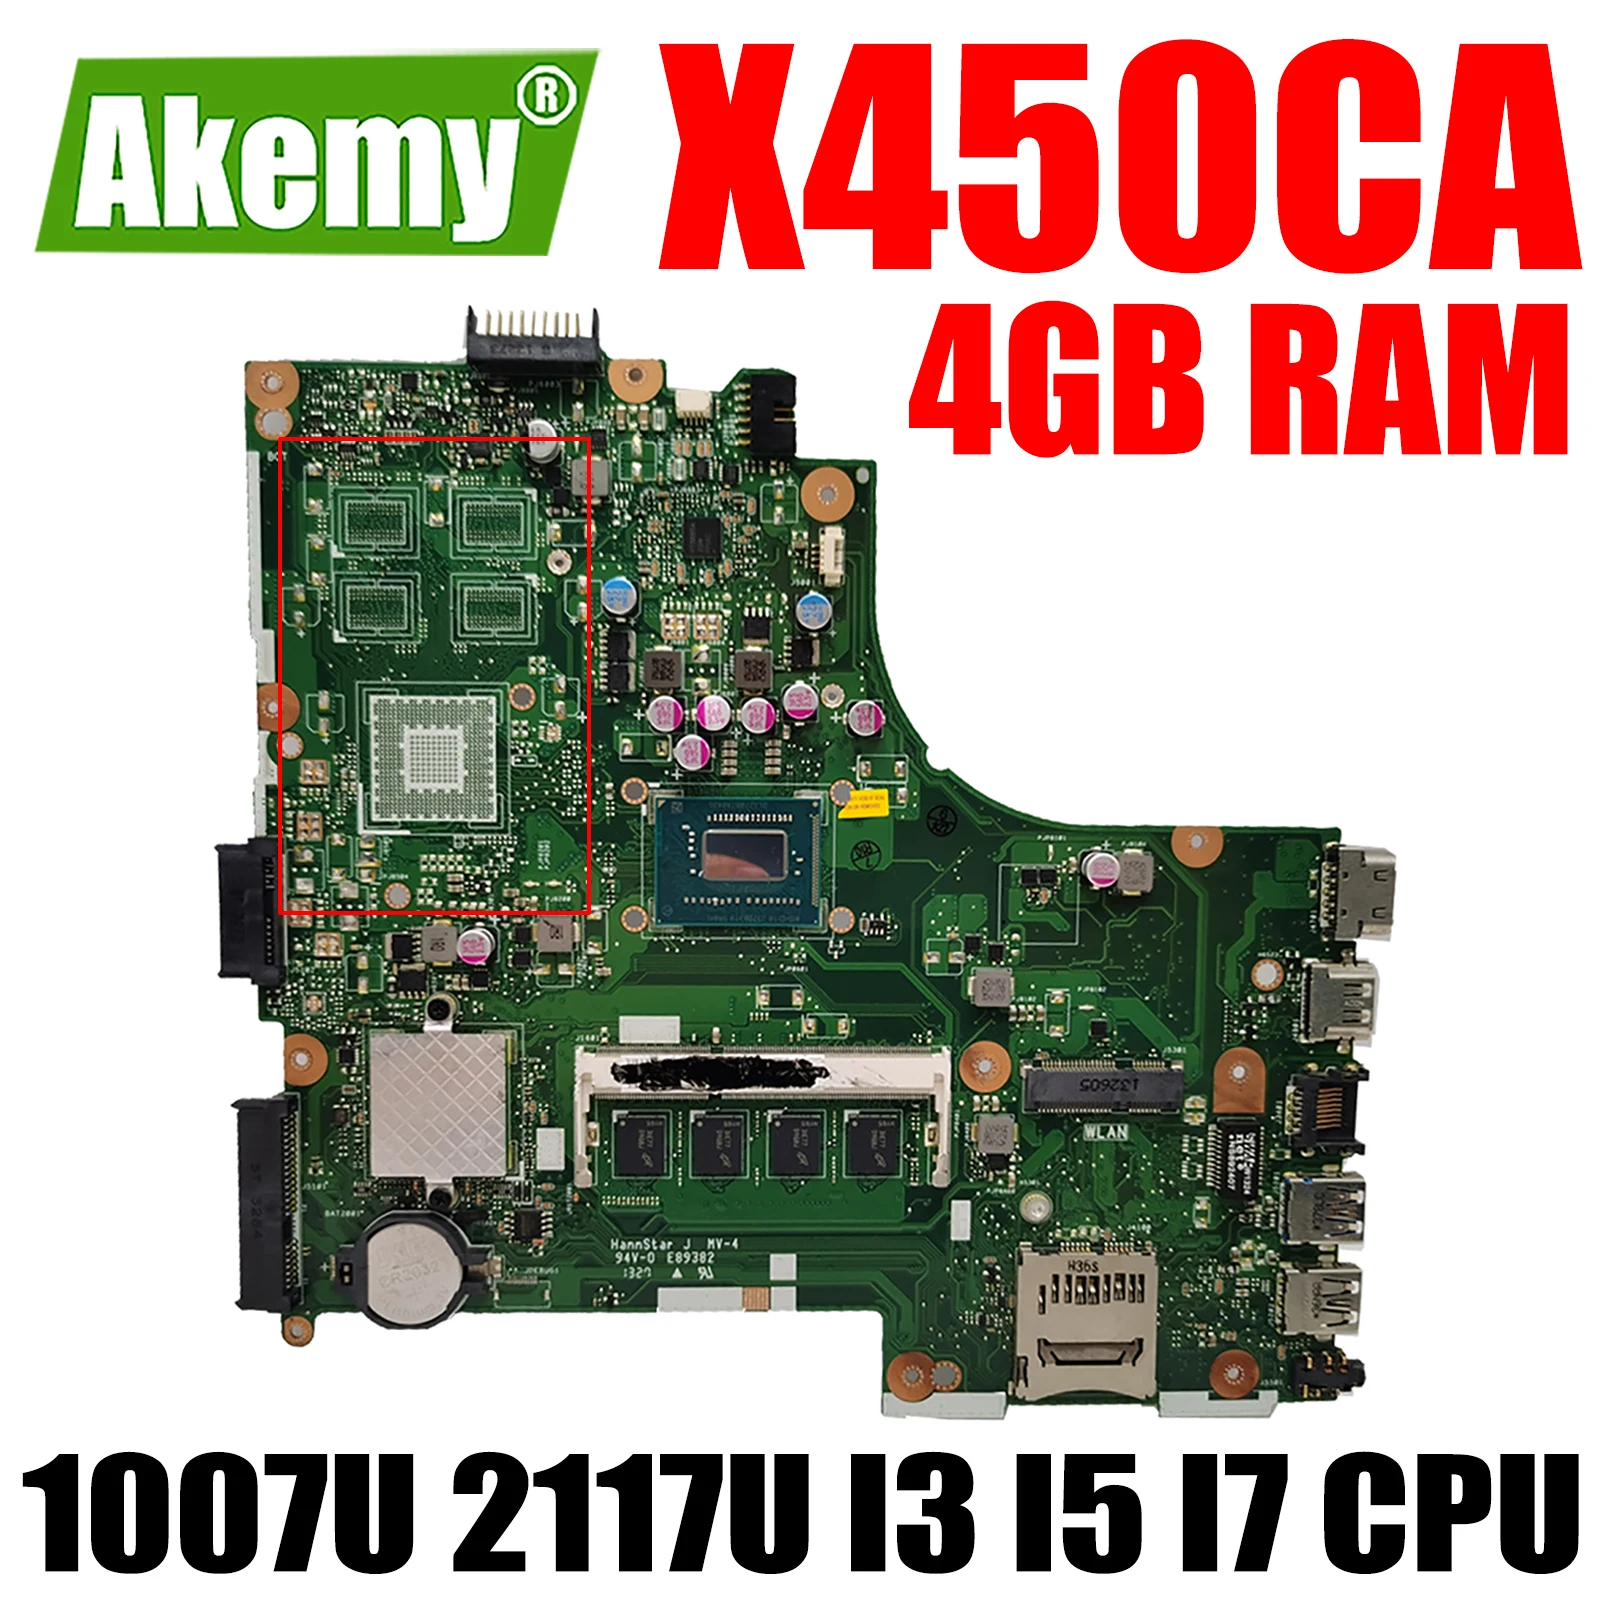 

X450CA original Mainboard for ASUS X450CC X450VP X450CA X450C Laptop Motherboard W/ 1007U 2117U I3 I5 I7 CPU 4GB RAM